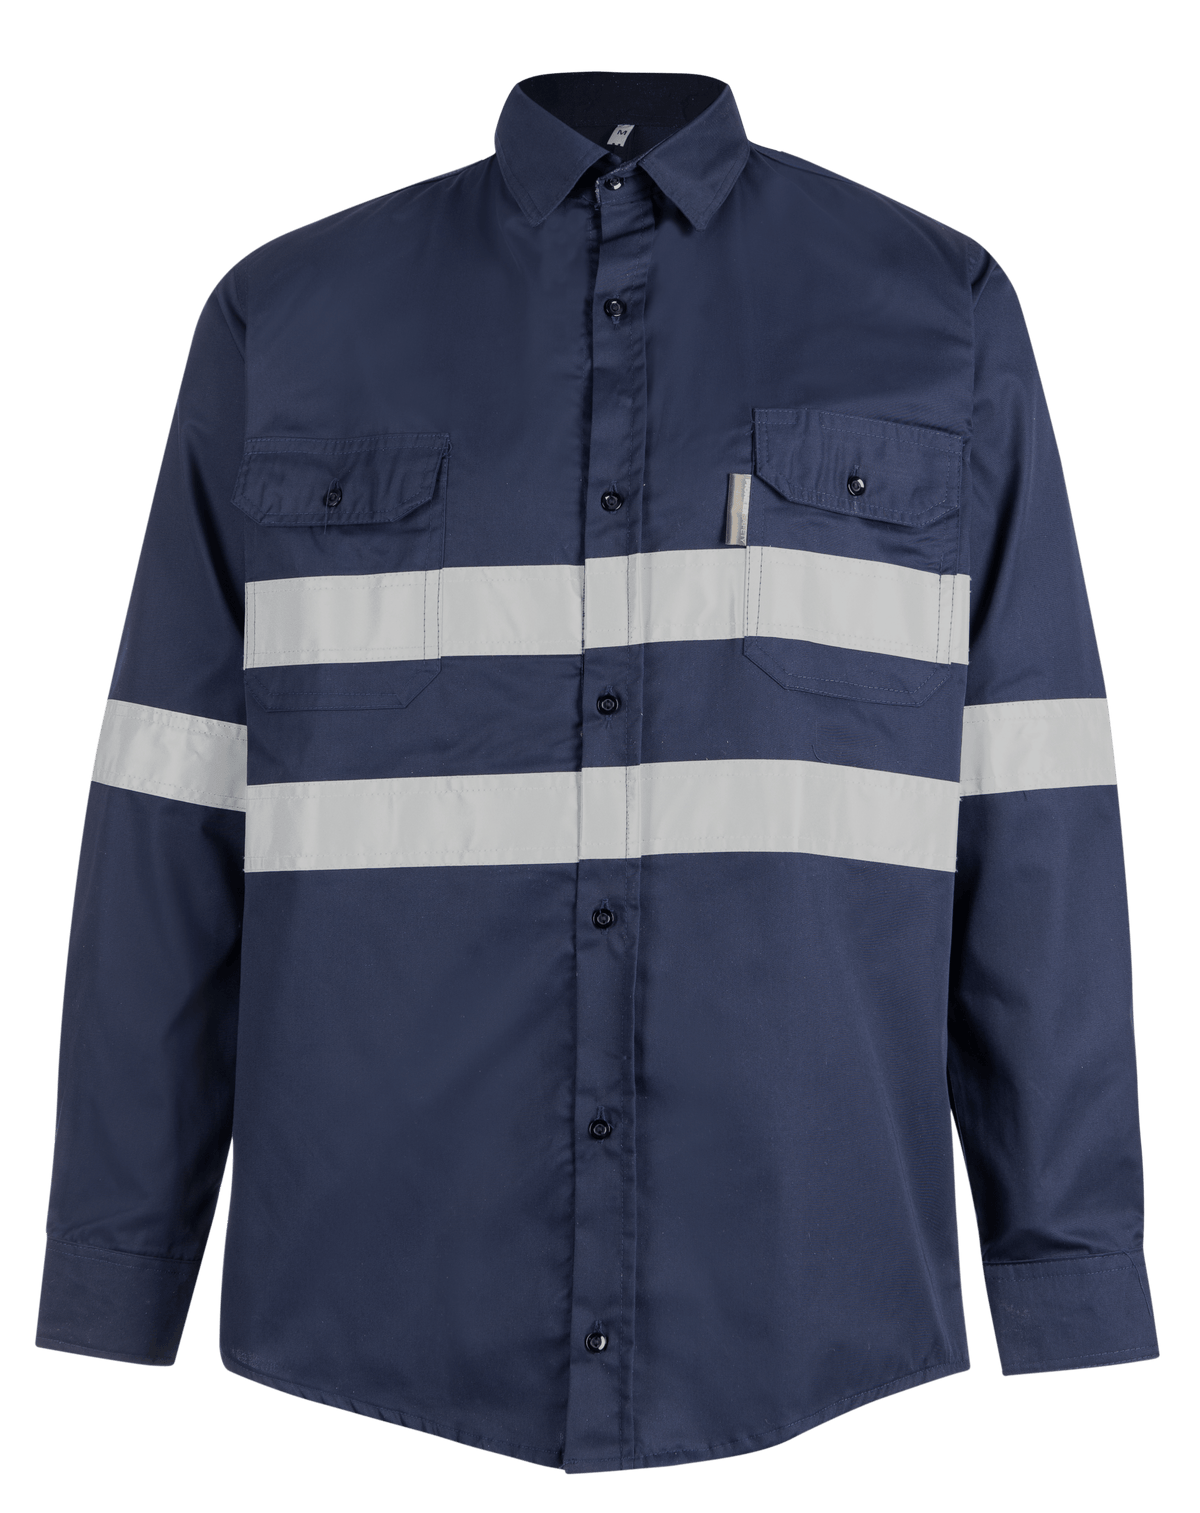 Reflective Shirt - Polycotton Navy